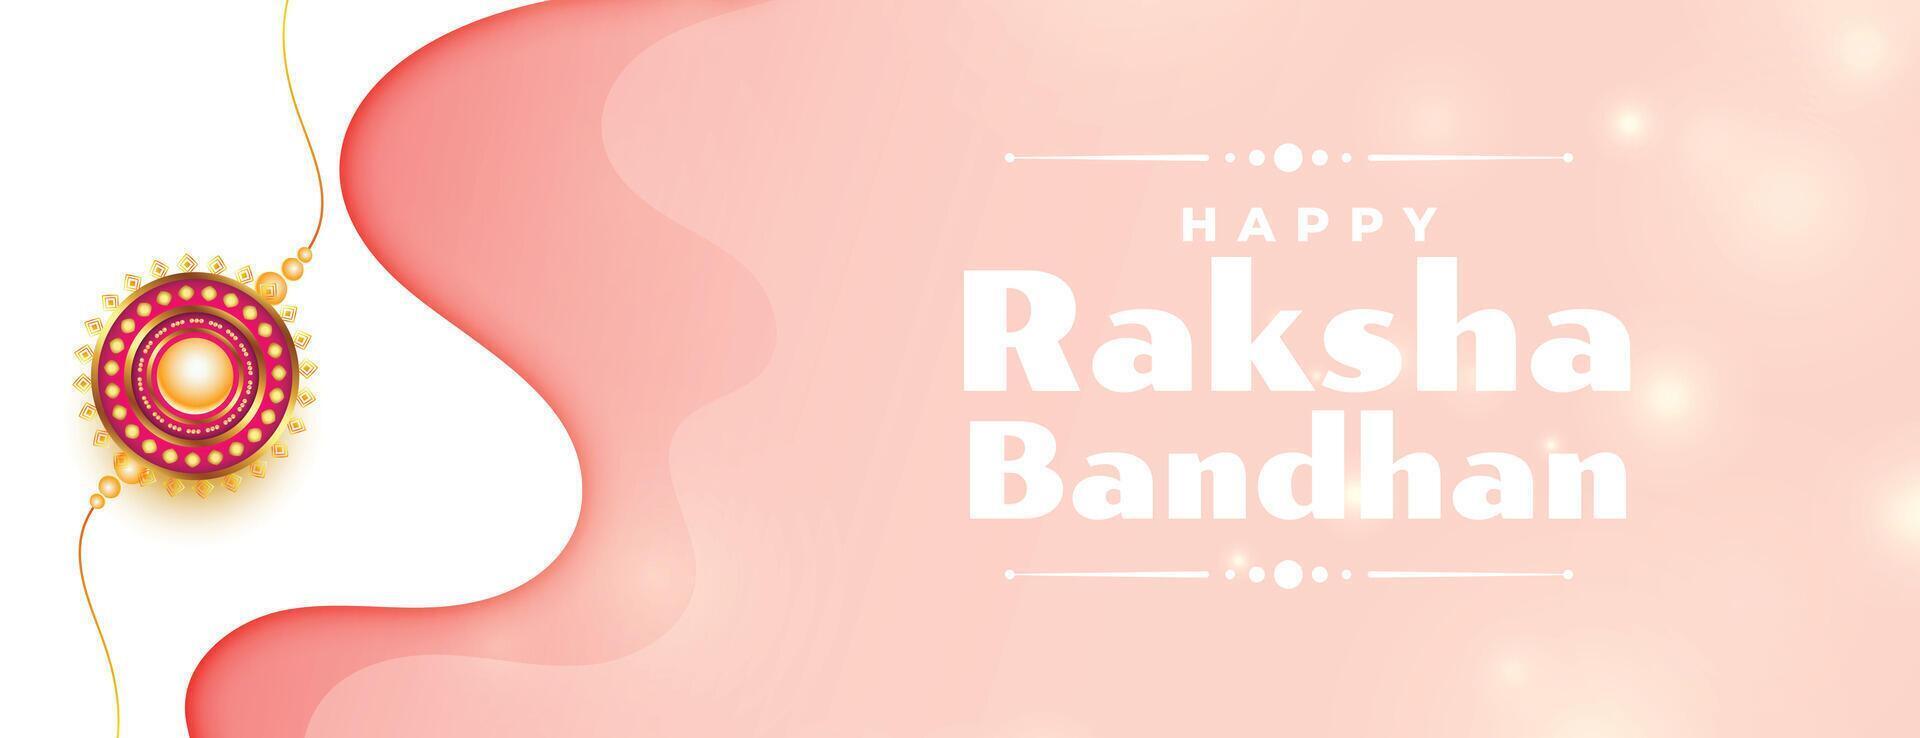 beautiful hindu festival raksha bandhan wishes card banner vector